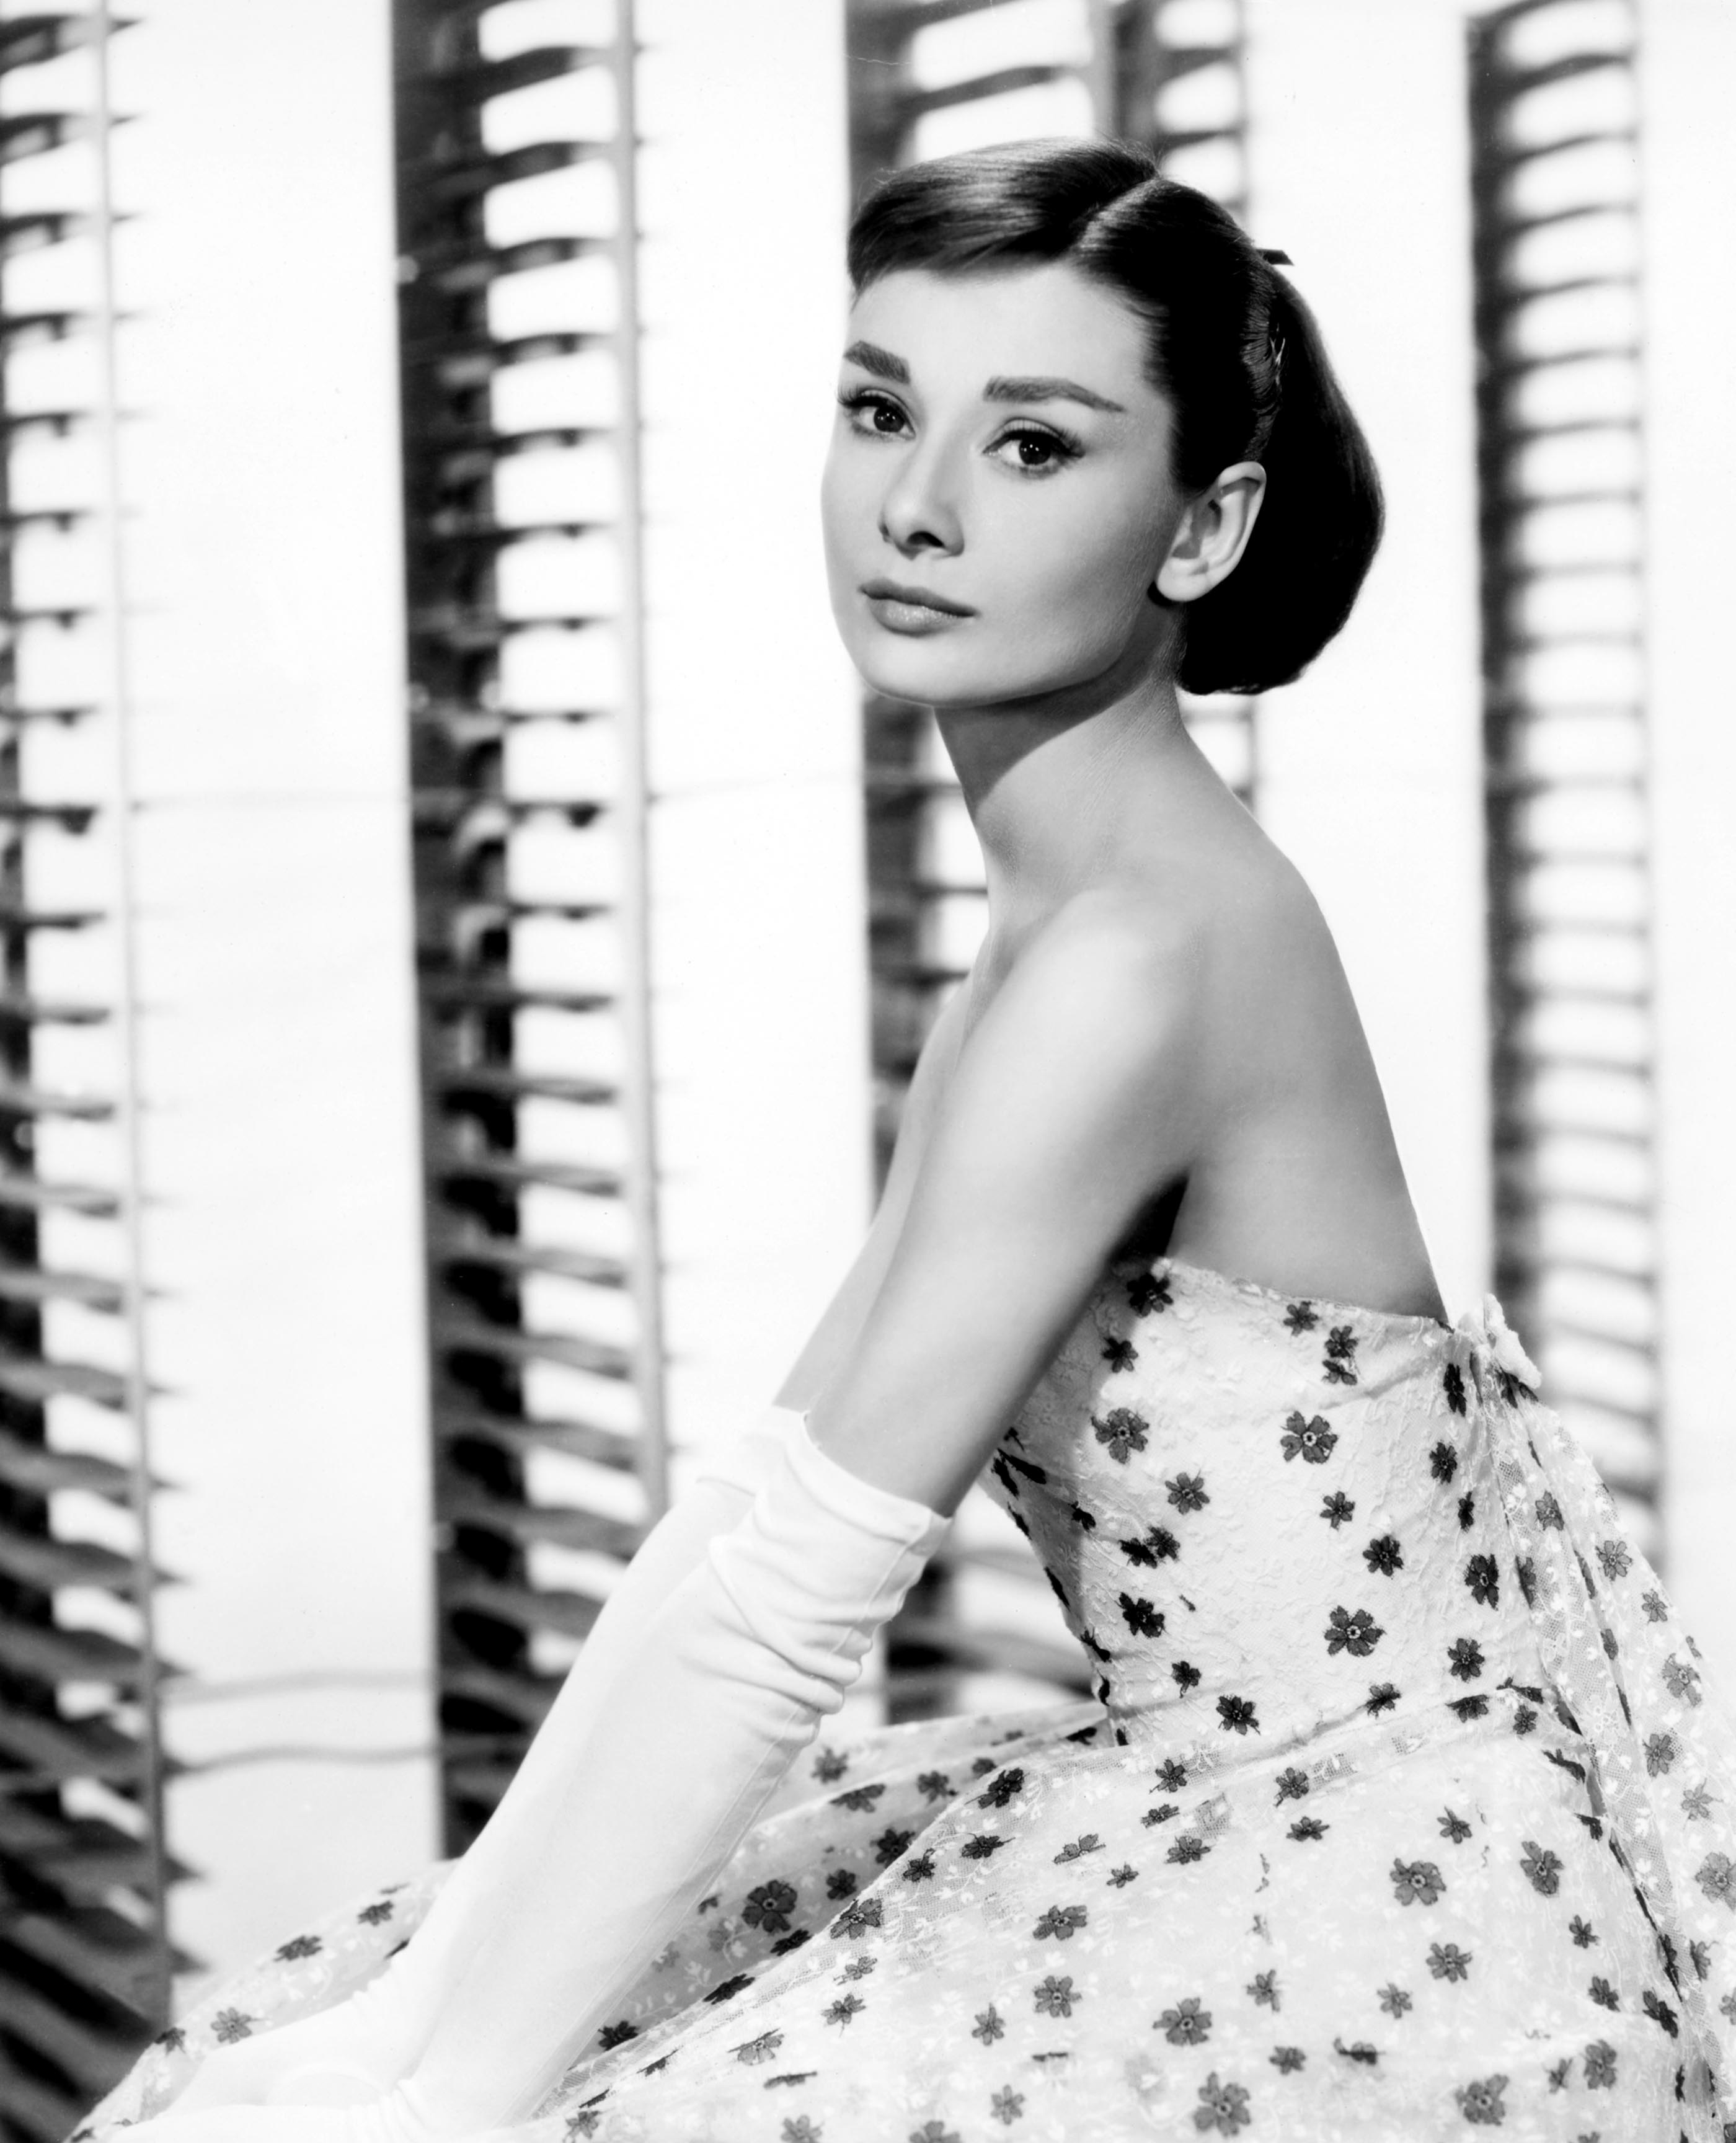 Audrey Hepburn Photo Gallery High Quality Pics Of Audrey Hepburn